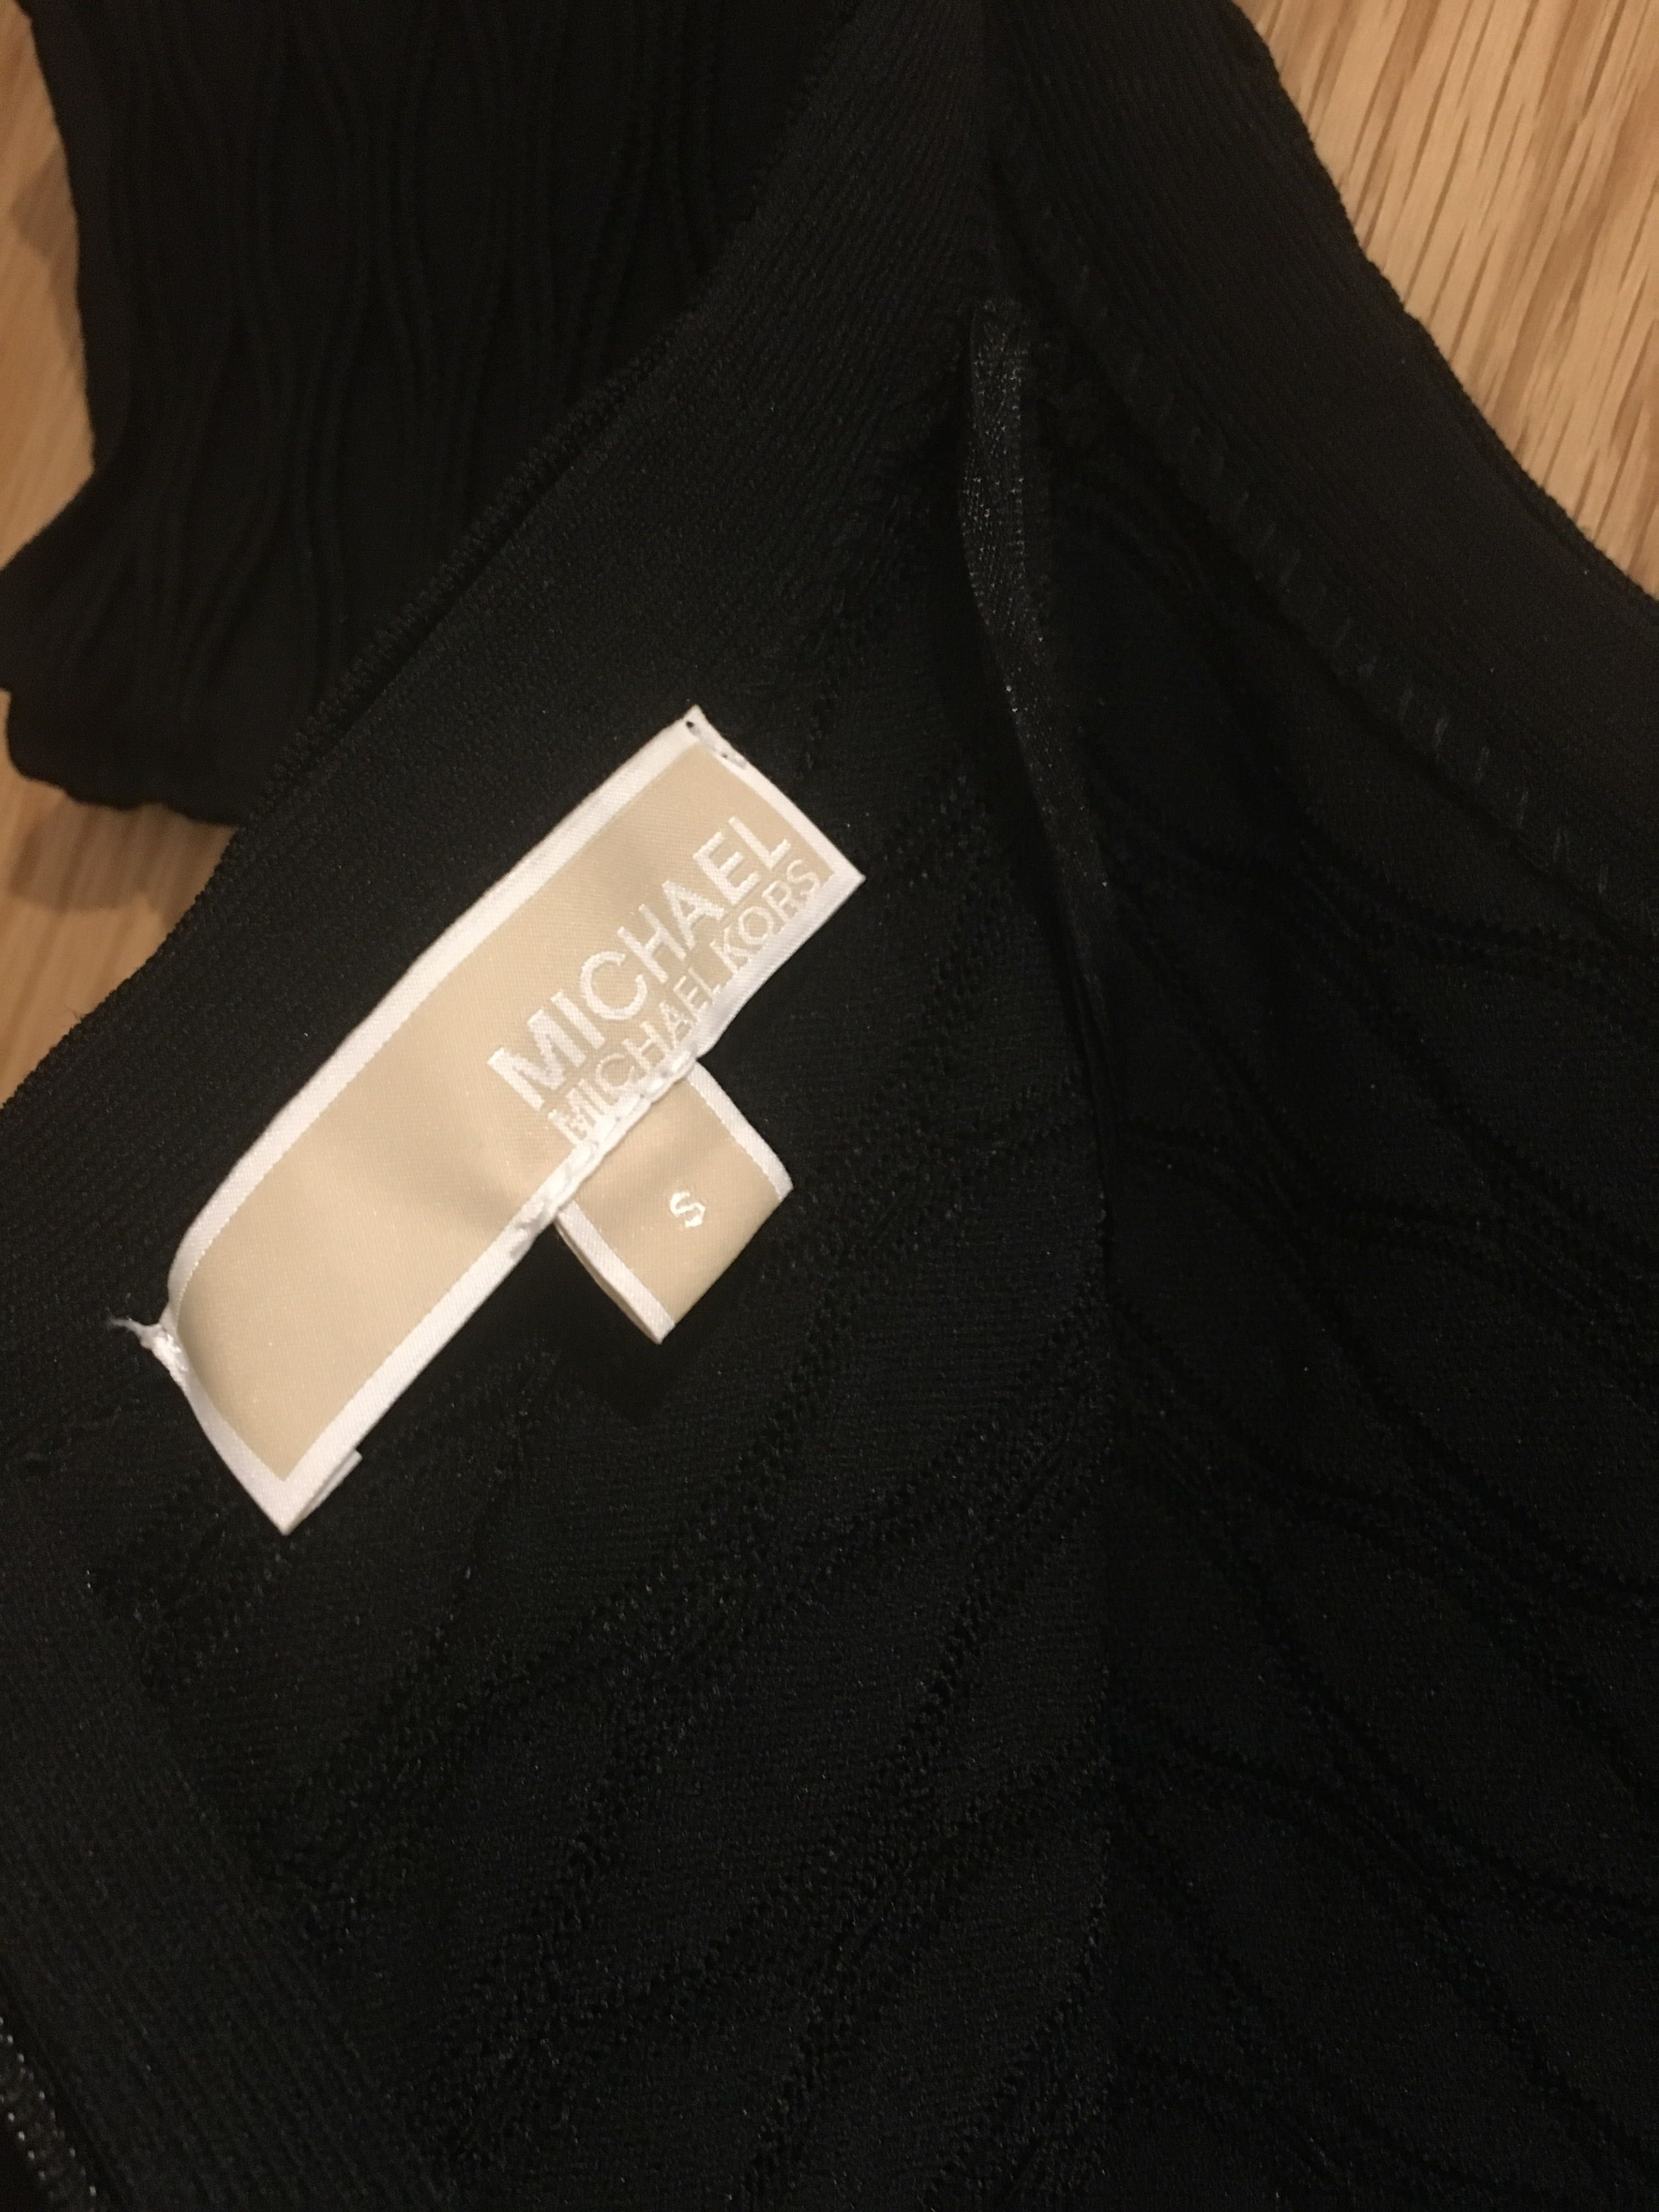 Vestido Michael Kors, preto, malha extensível, tamanho S